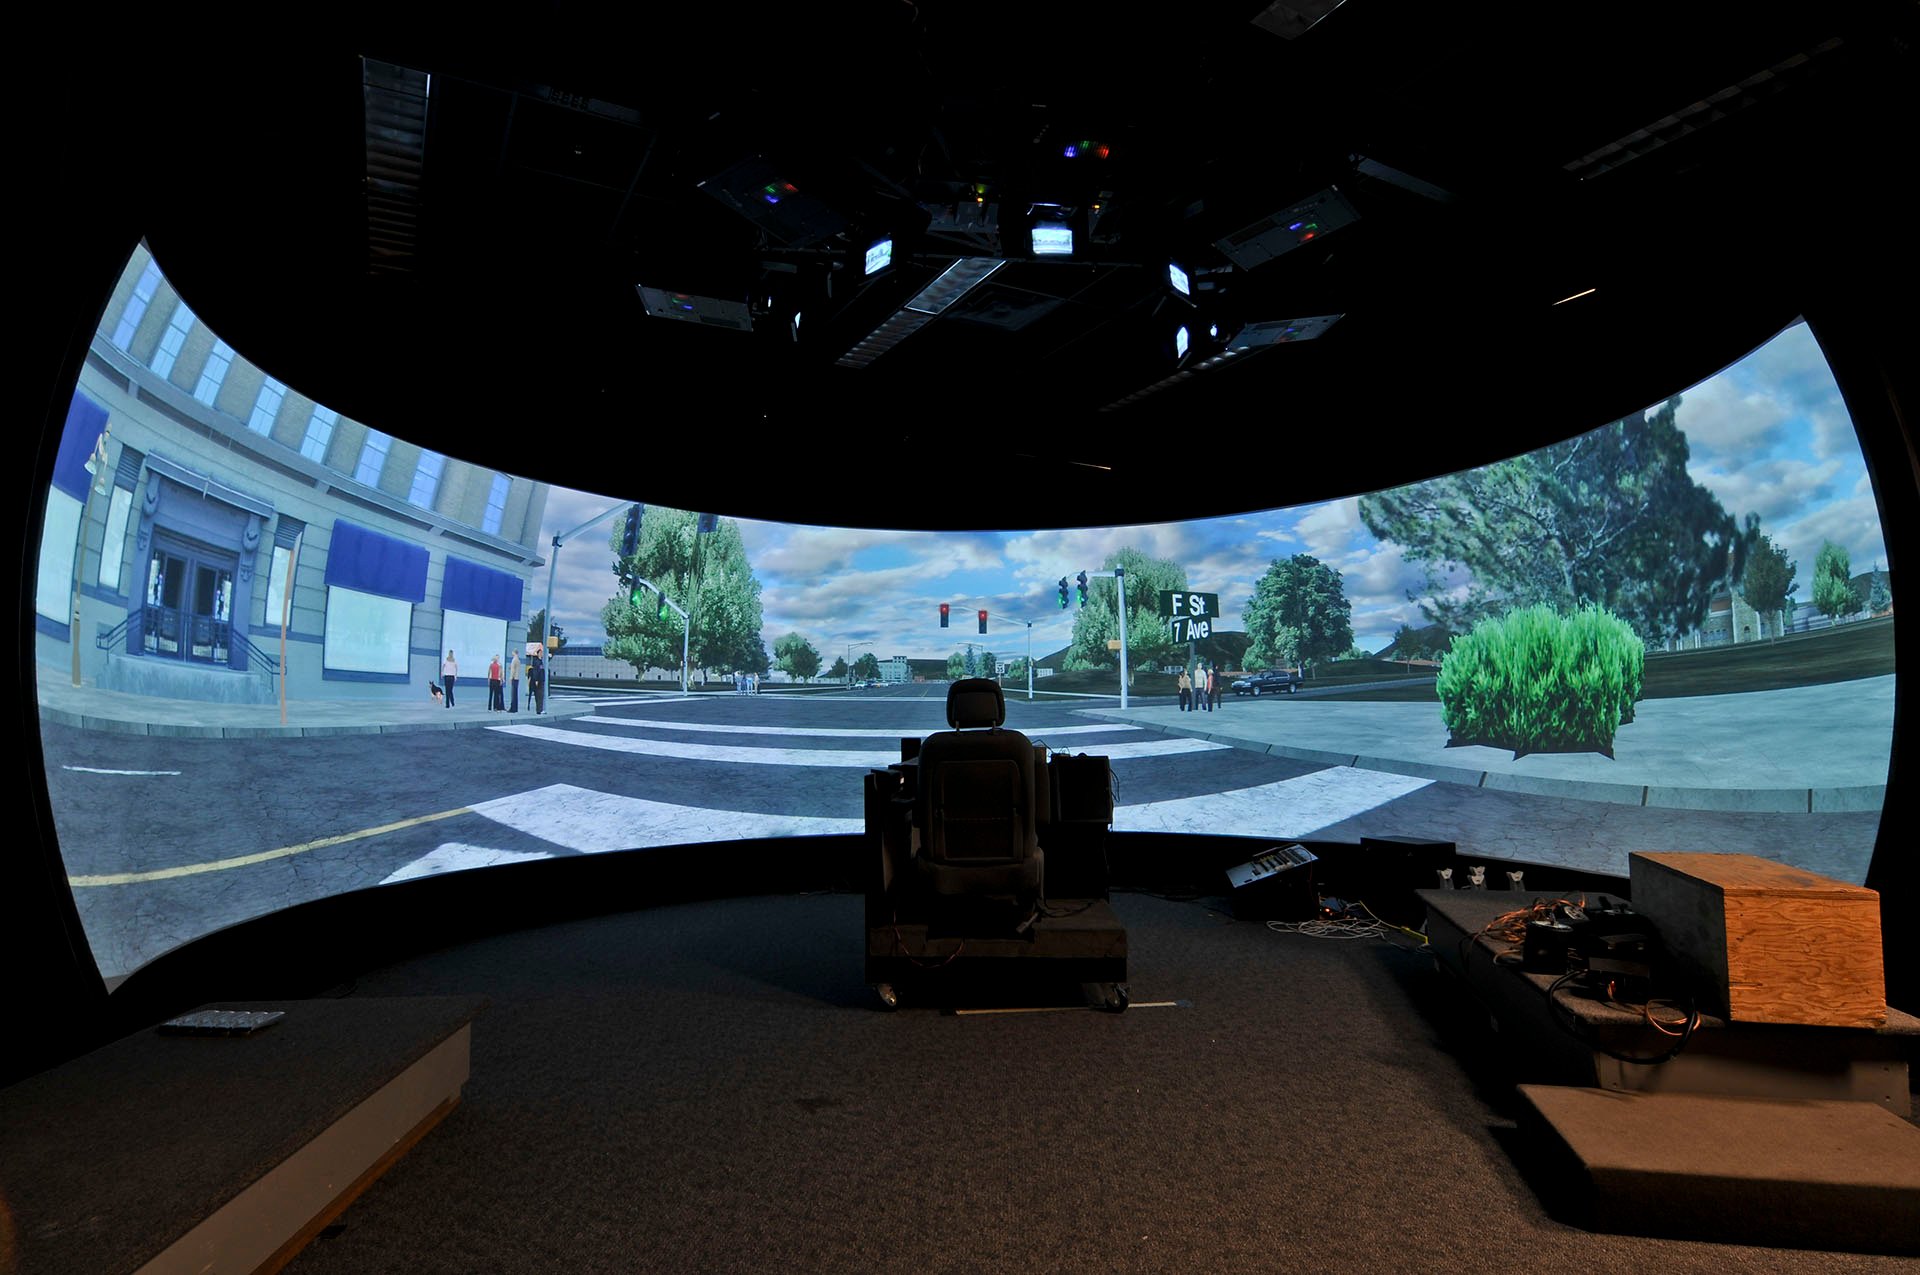 IGI 180 degree projection automotive driving simulator